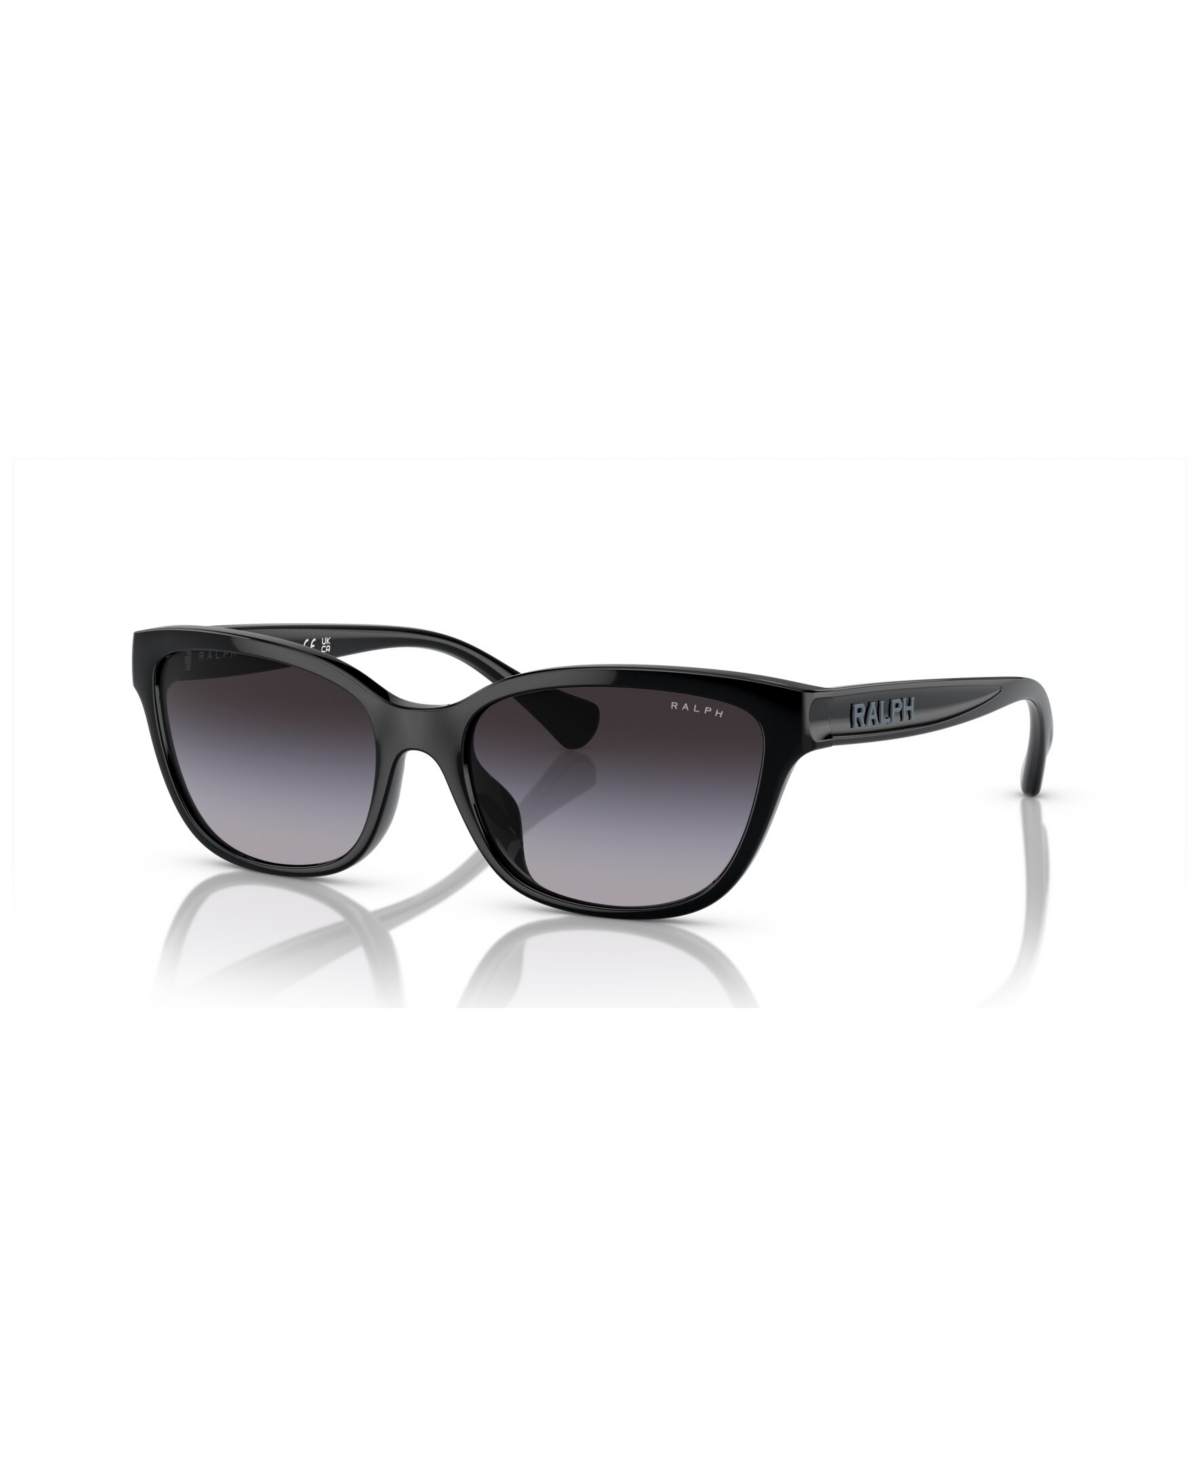 Women's Sunglasses, Gradient RA5307U - Shiny Black